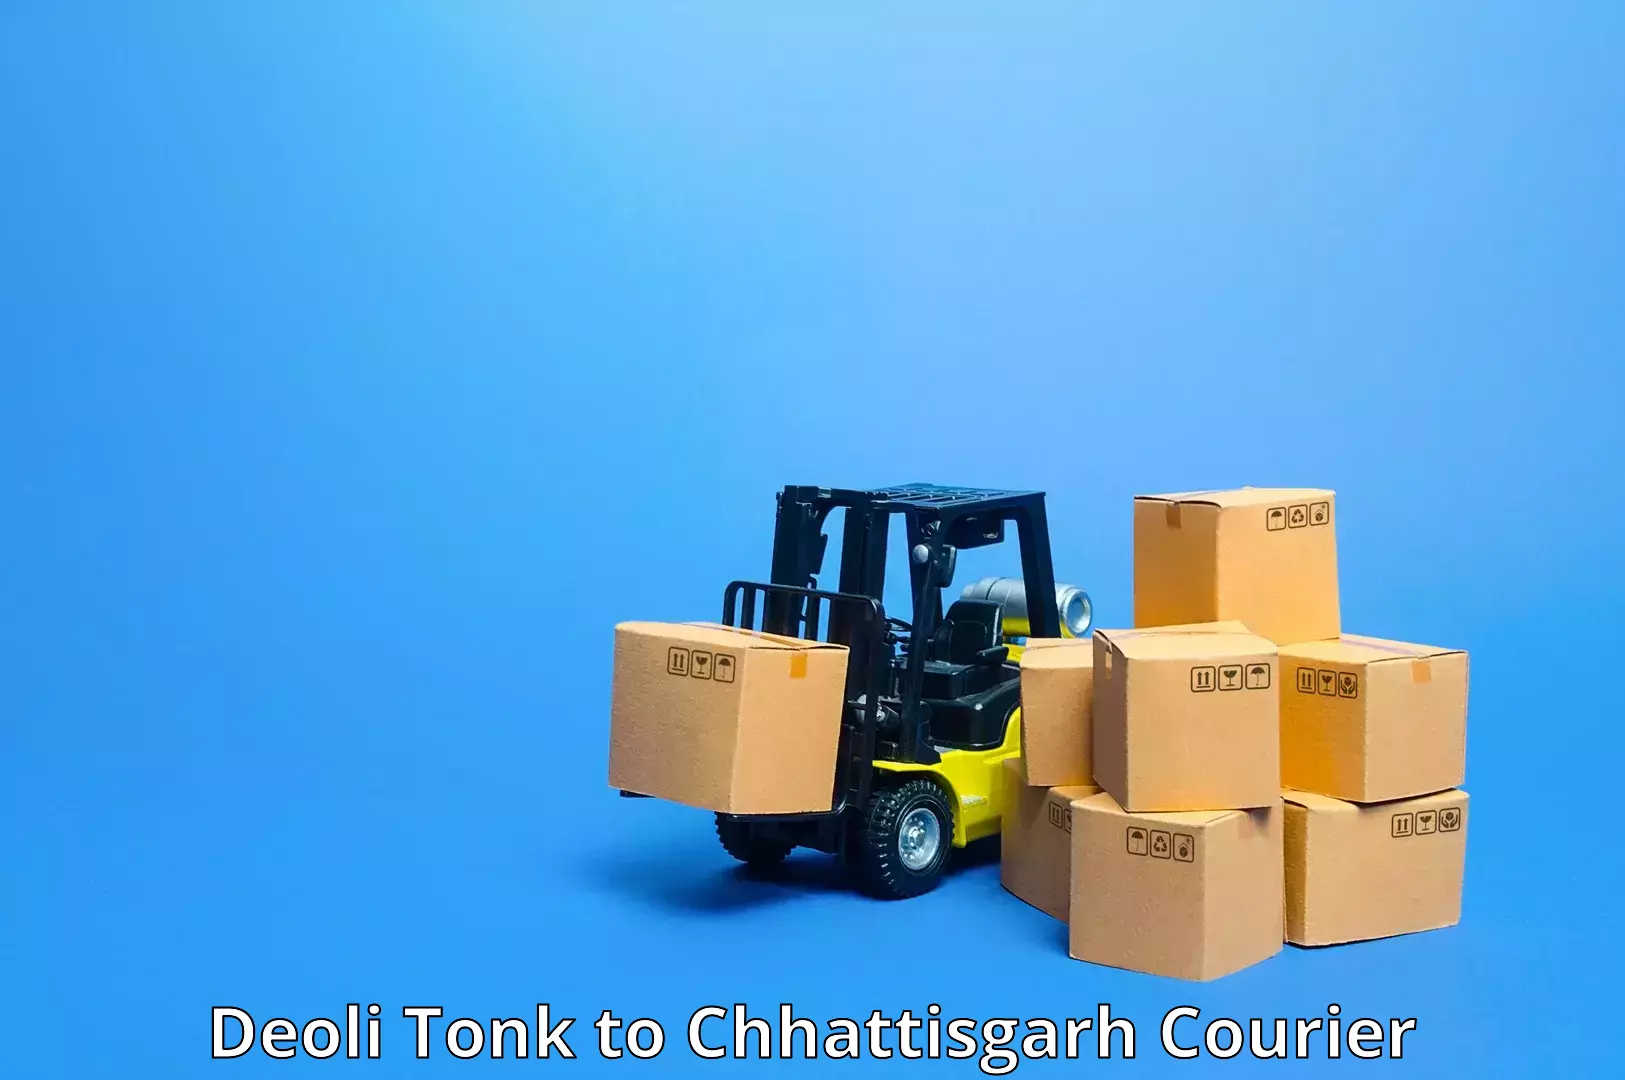 Multi-national courier services Deoli Tonk to Chhattisgarh